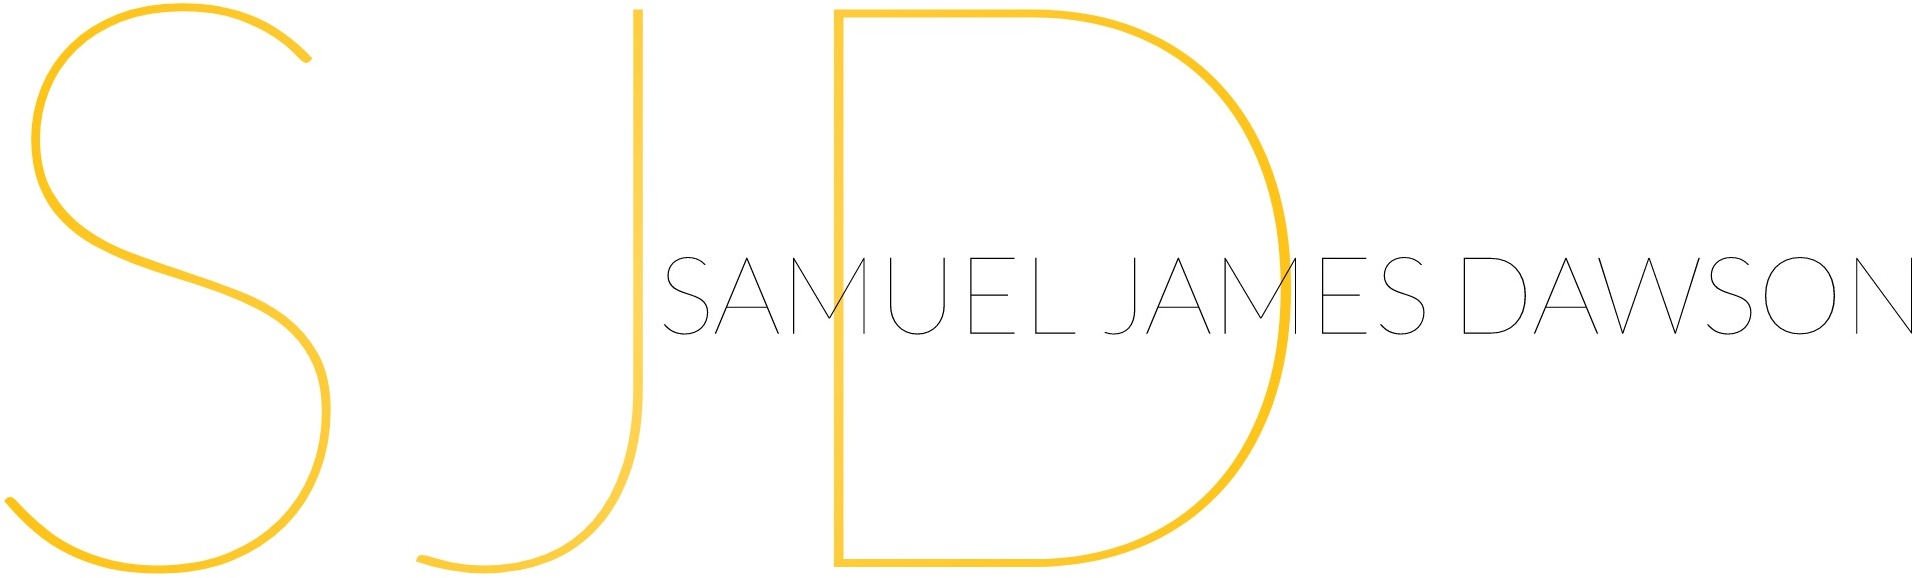 Samuel James Dawson's Portfolio